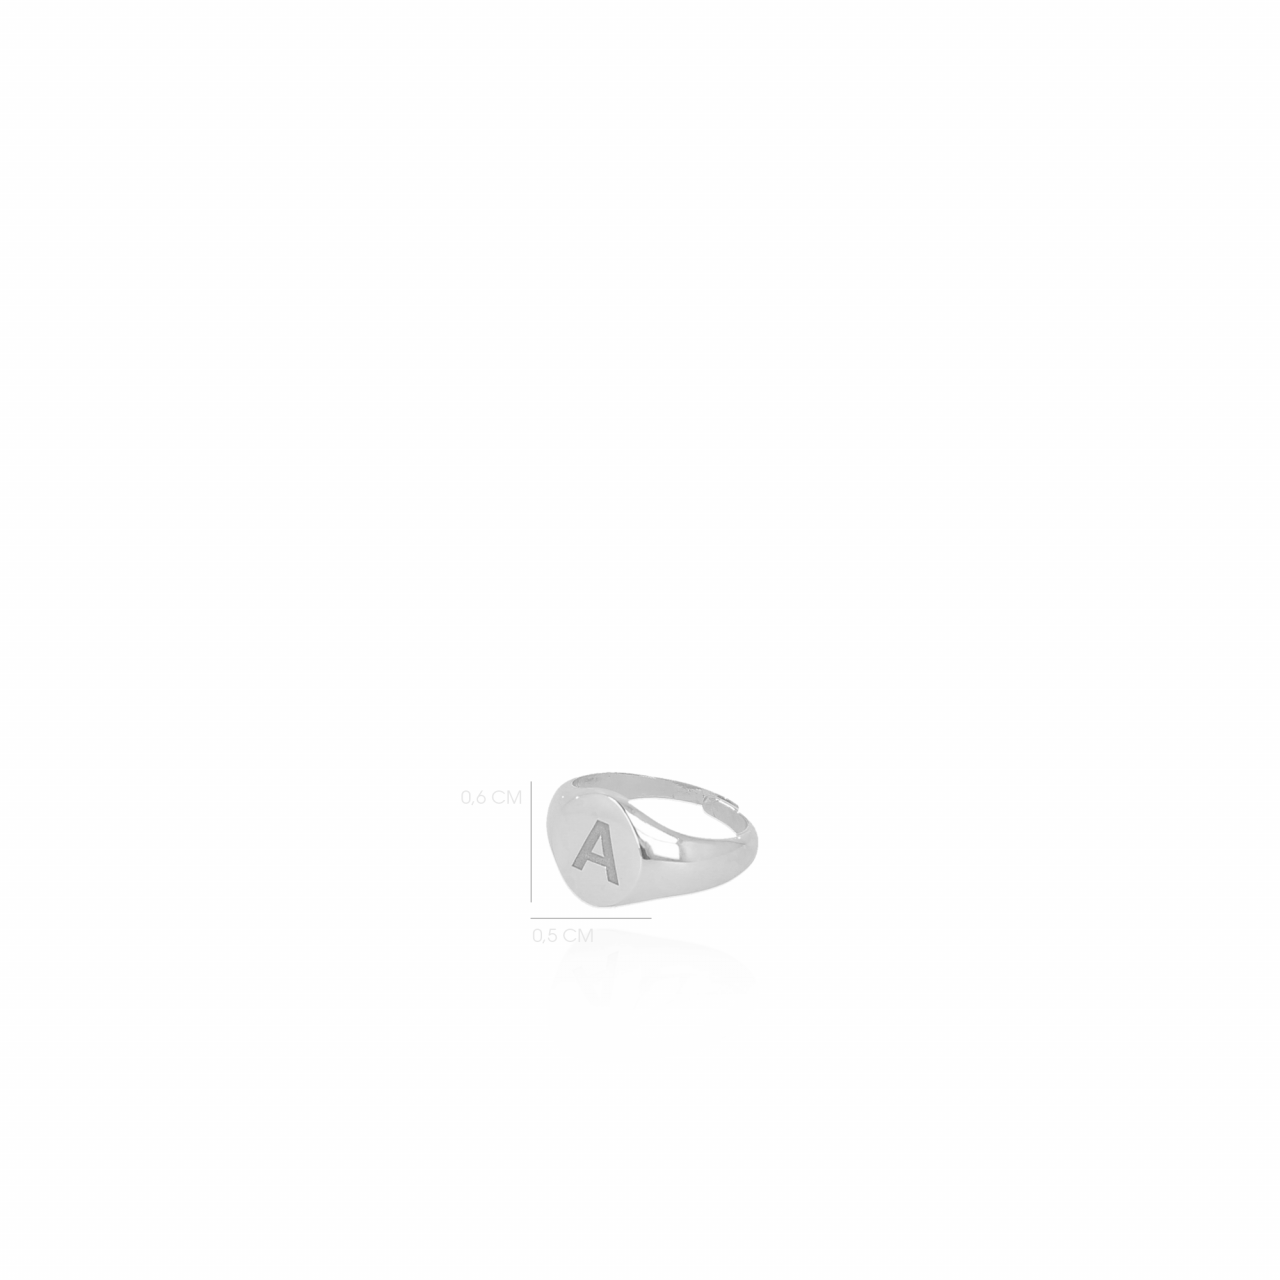 Zilveren Ring Initial Seallott-theme.productDescriptionPage.SEO.byTheBrand